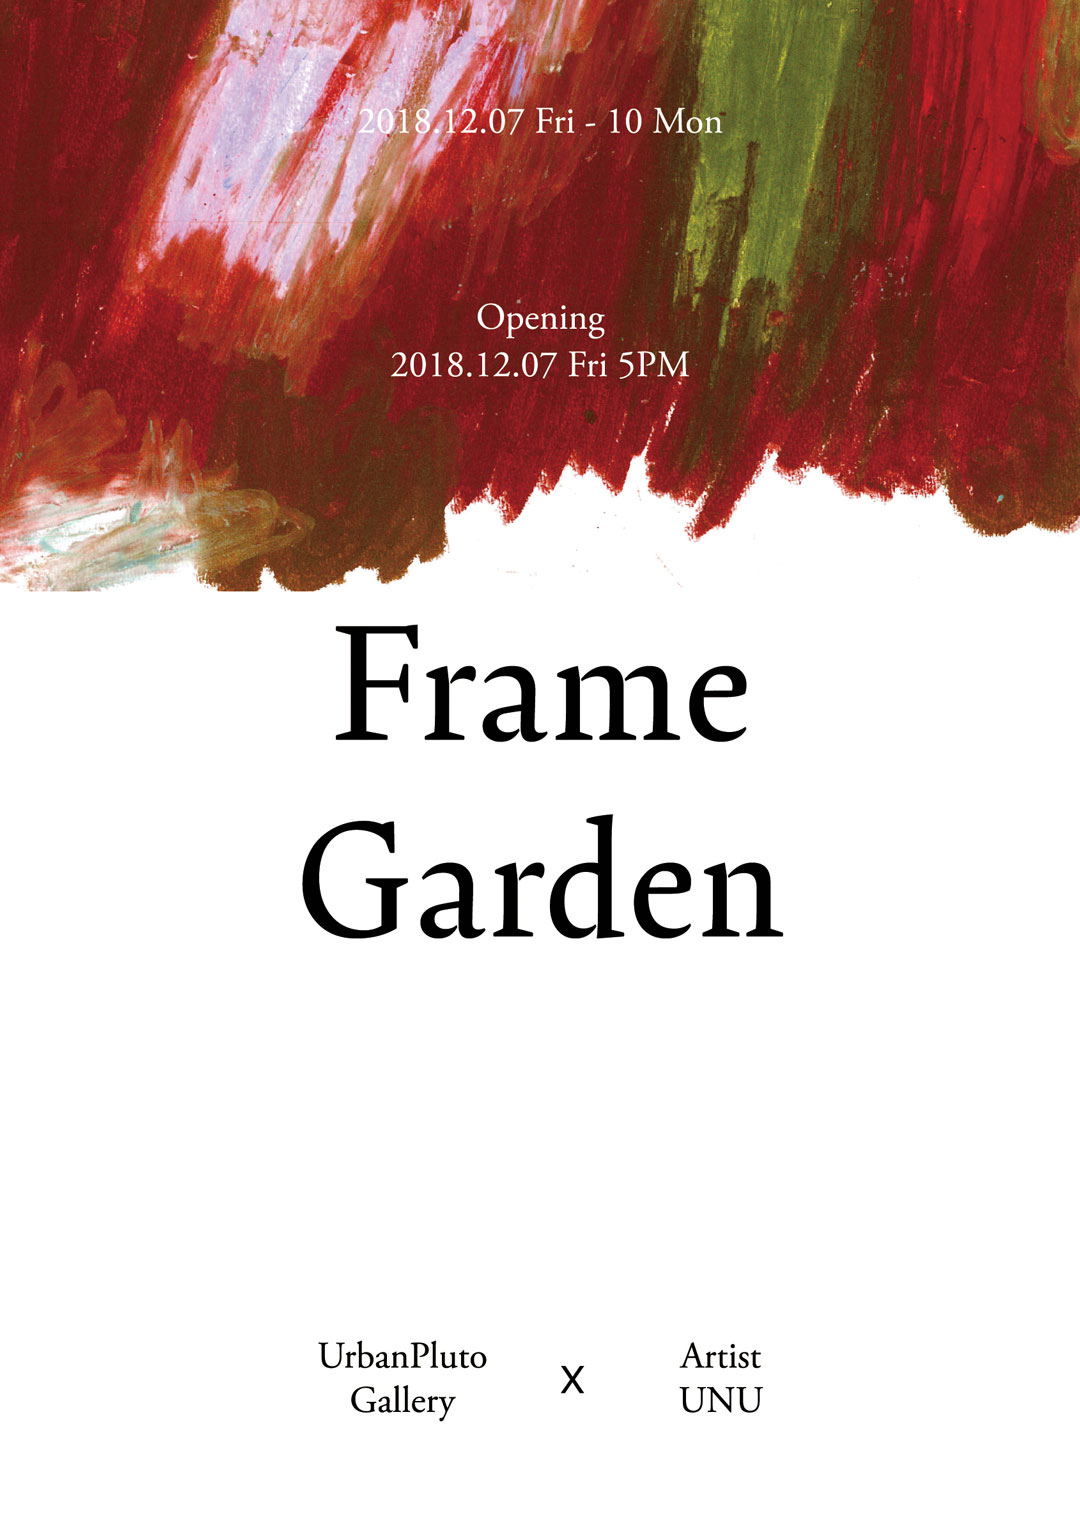 Frame garden : 스마트폰 속의 아날로그 정원 - 무료전시